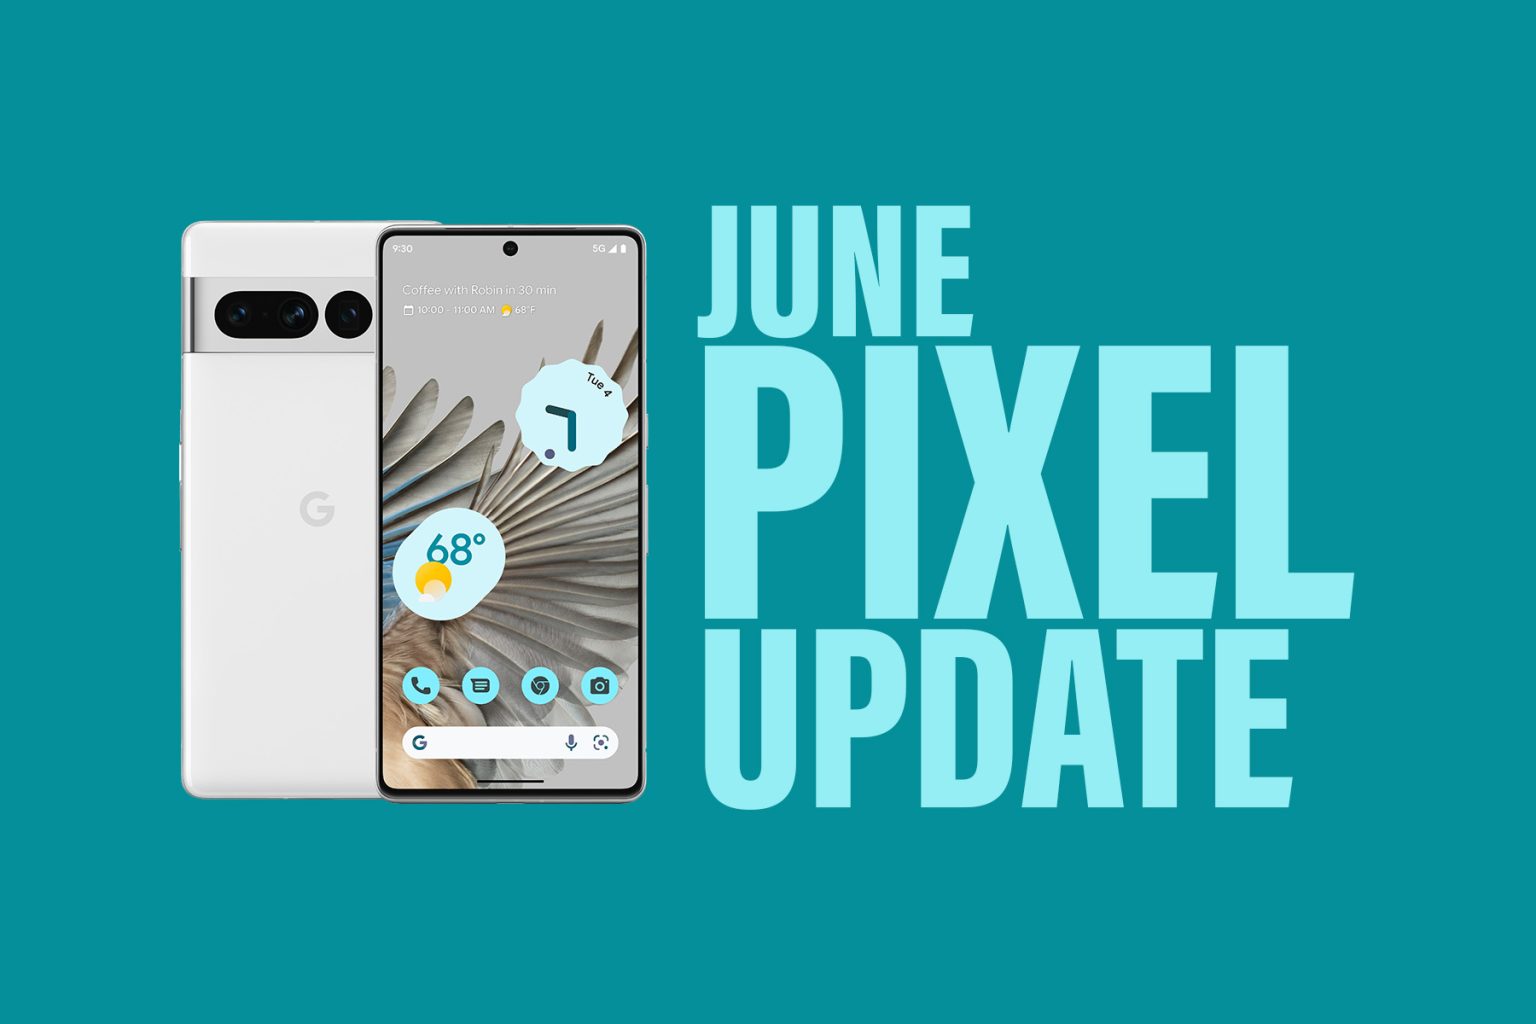 Your Google Pixel Phone's June Update Arrived